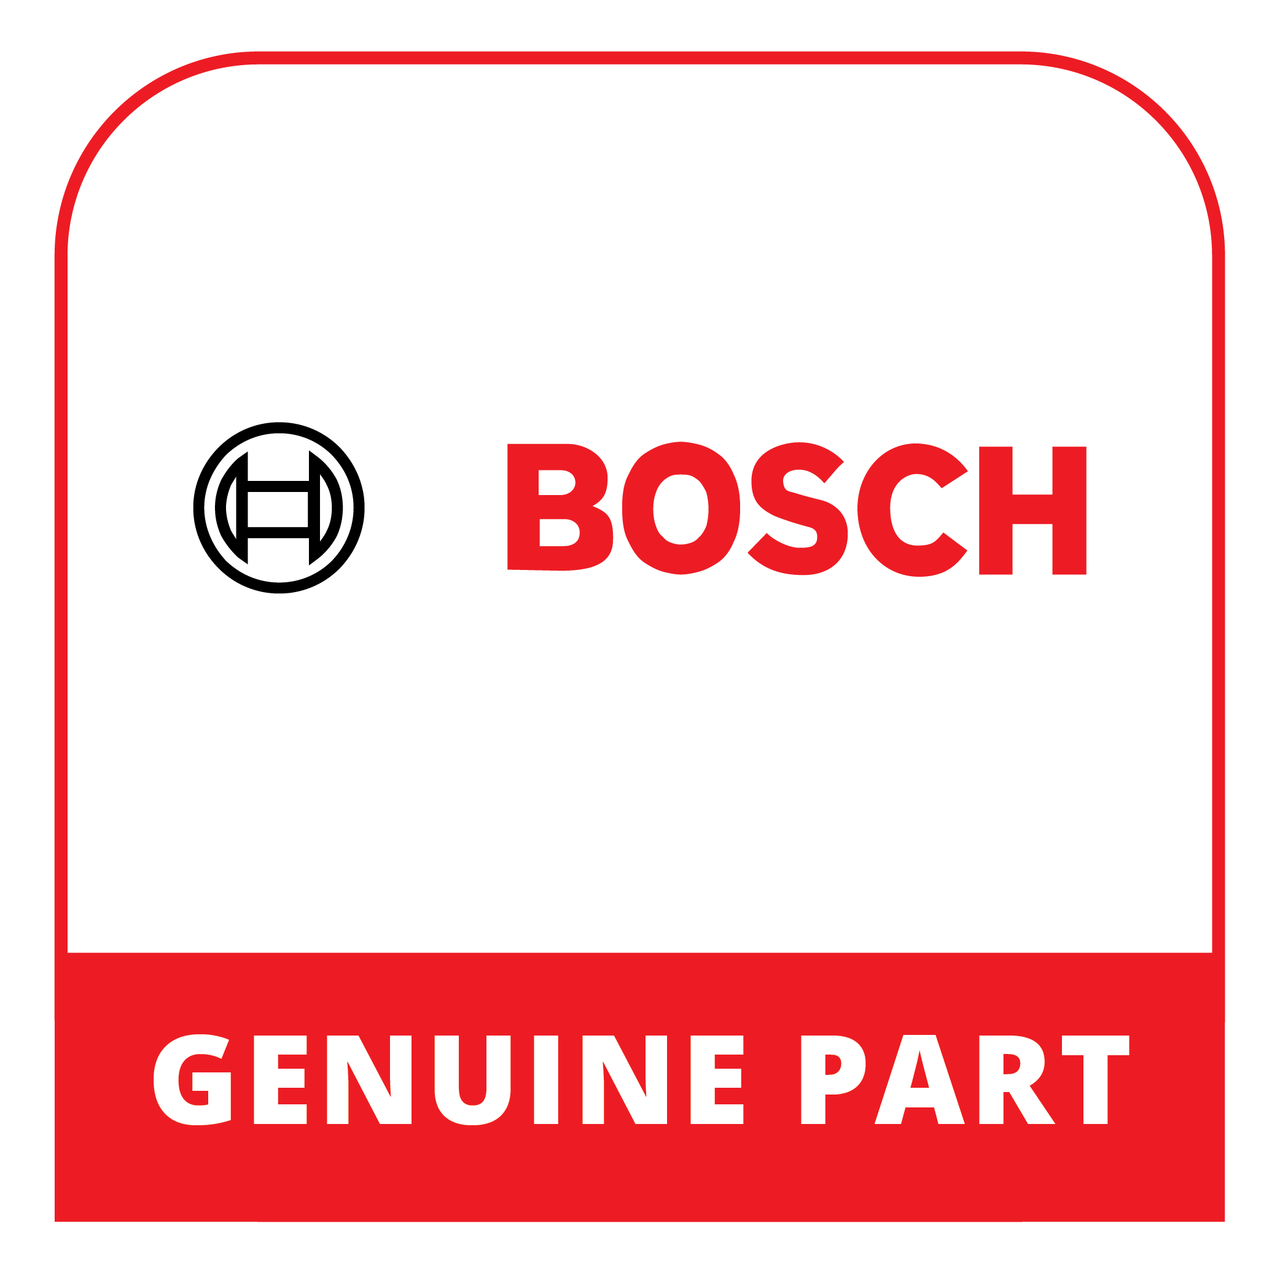 Bosch (Thermador) 23000049 - Glass Ceramic Hob Top - Genuine Bosch (Thermador) Part